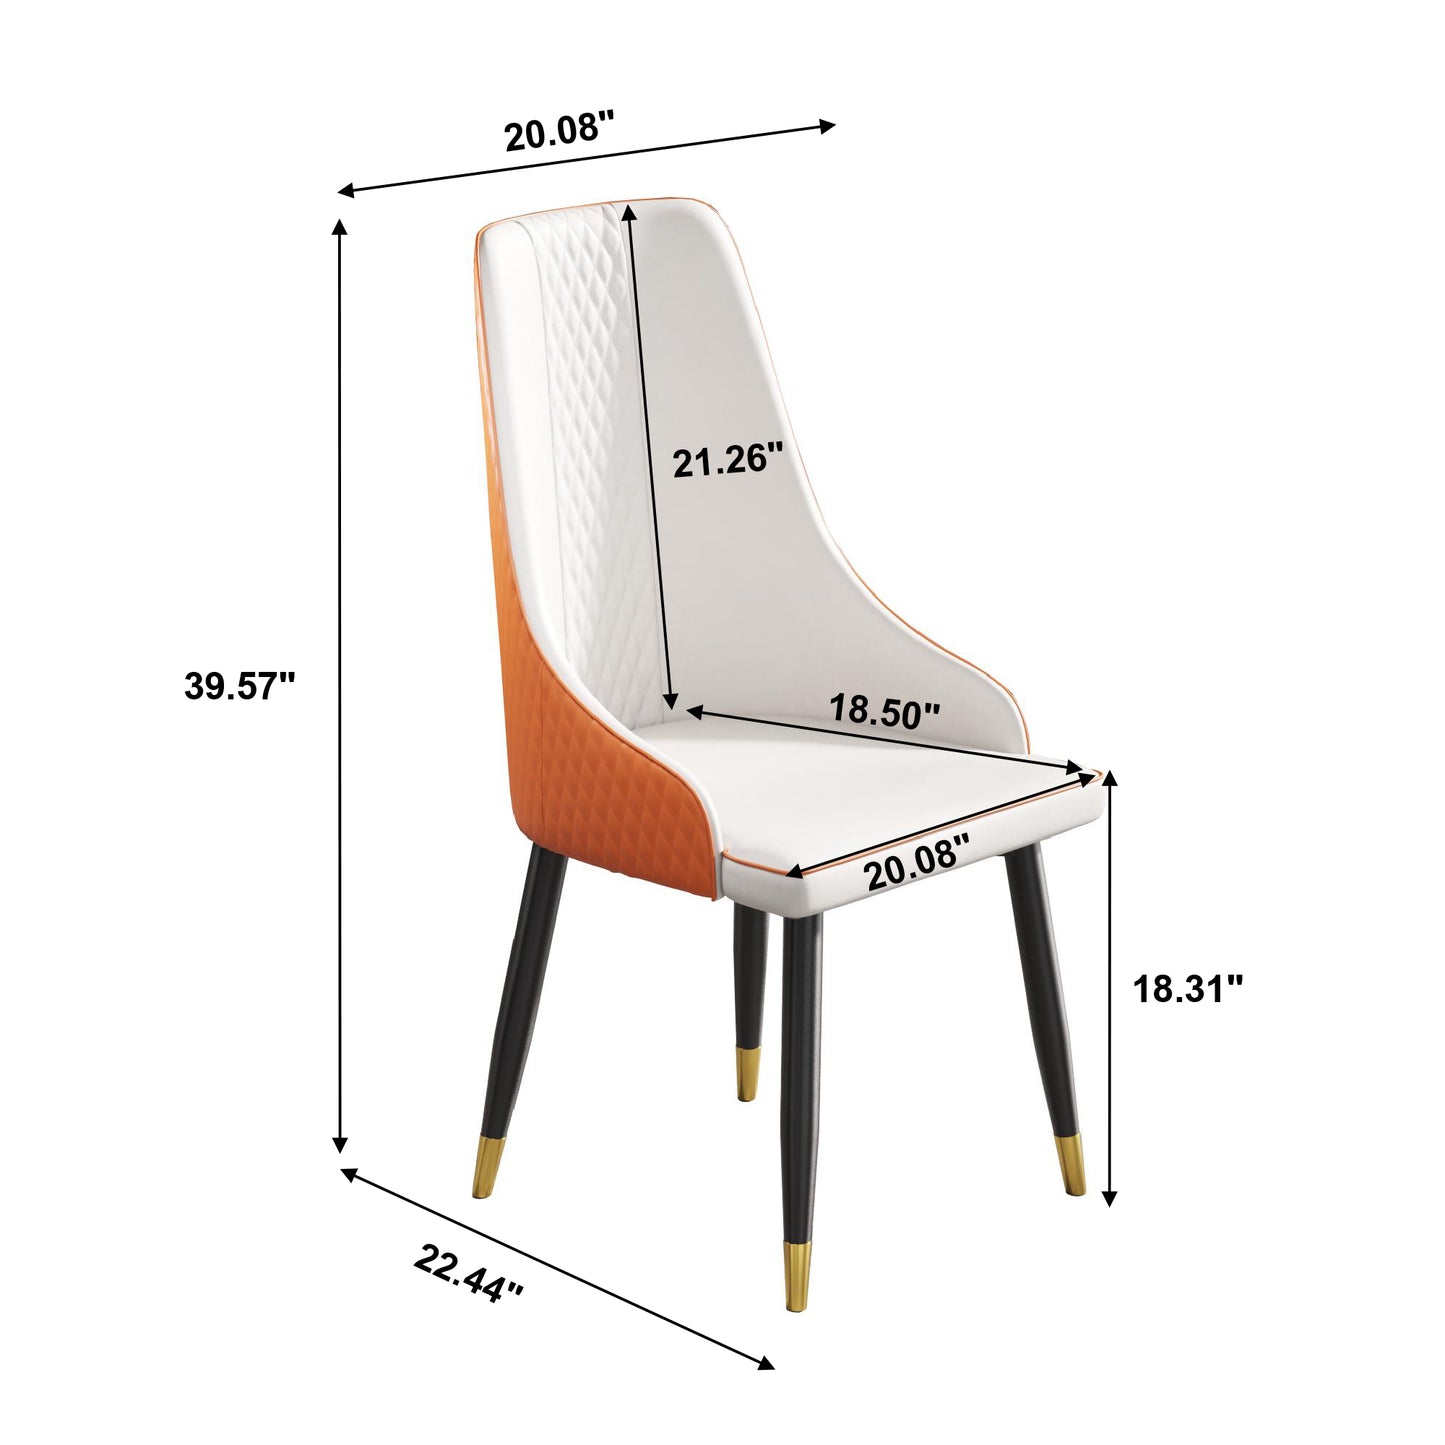 Modern dining chair PU leather metal legs-white+orange-2pcs/ctn